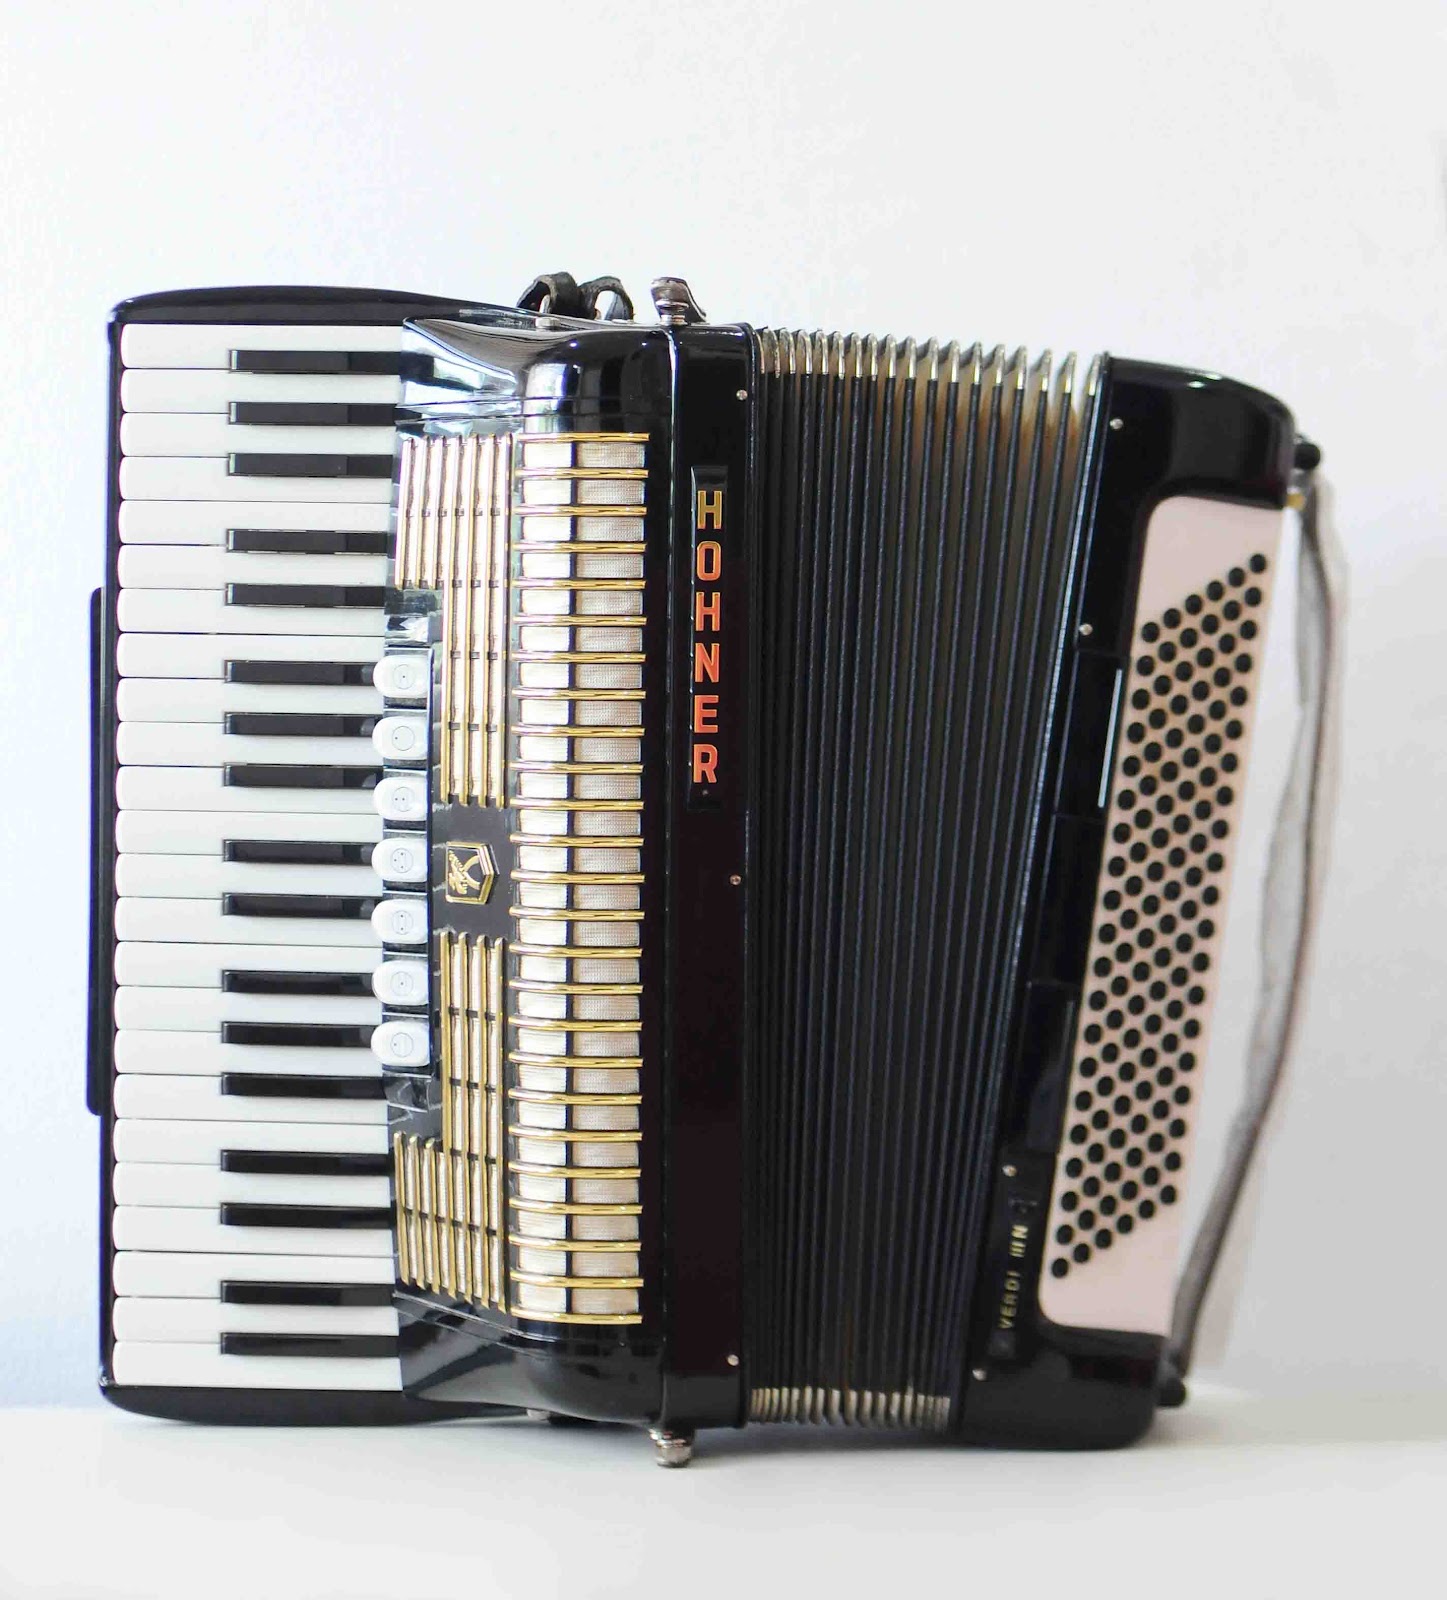 hohner accordion models old